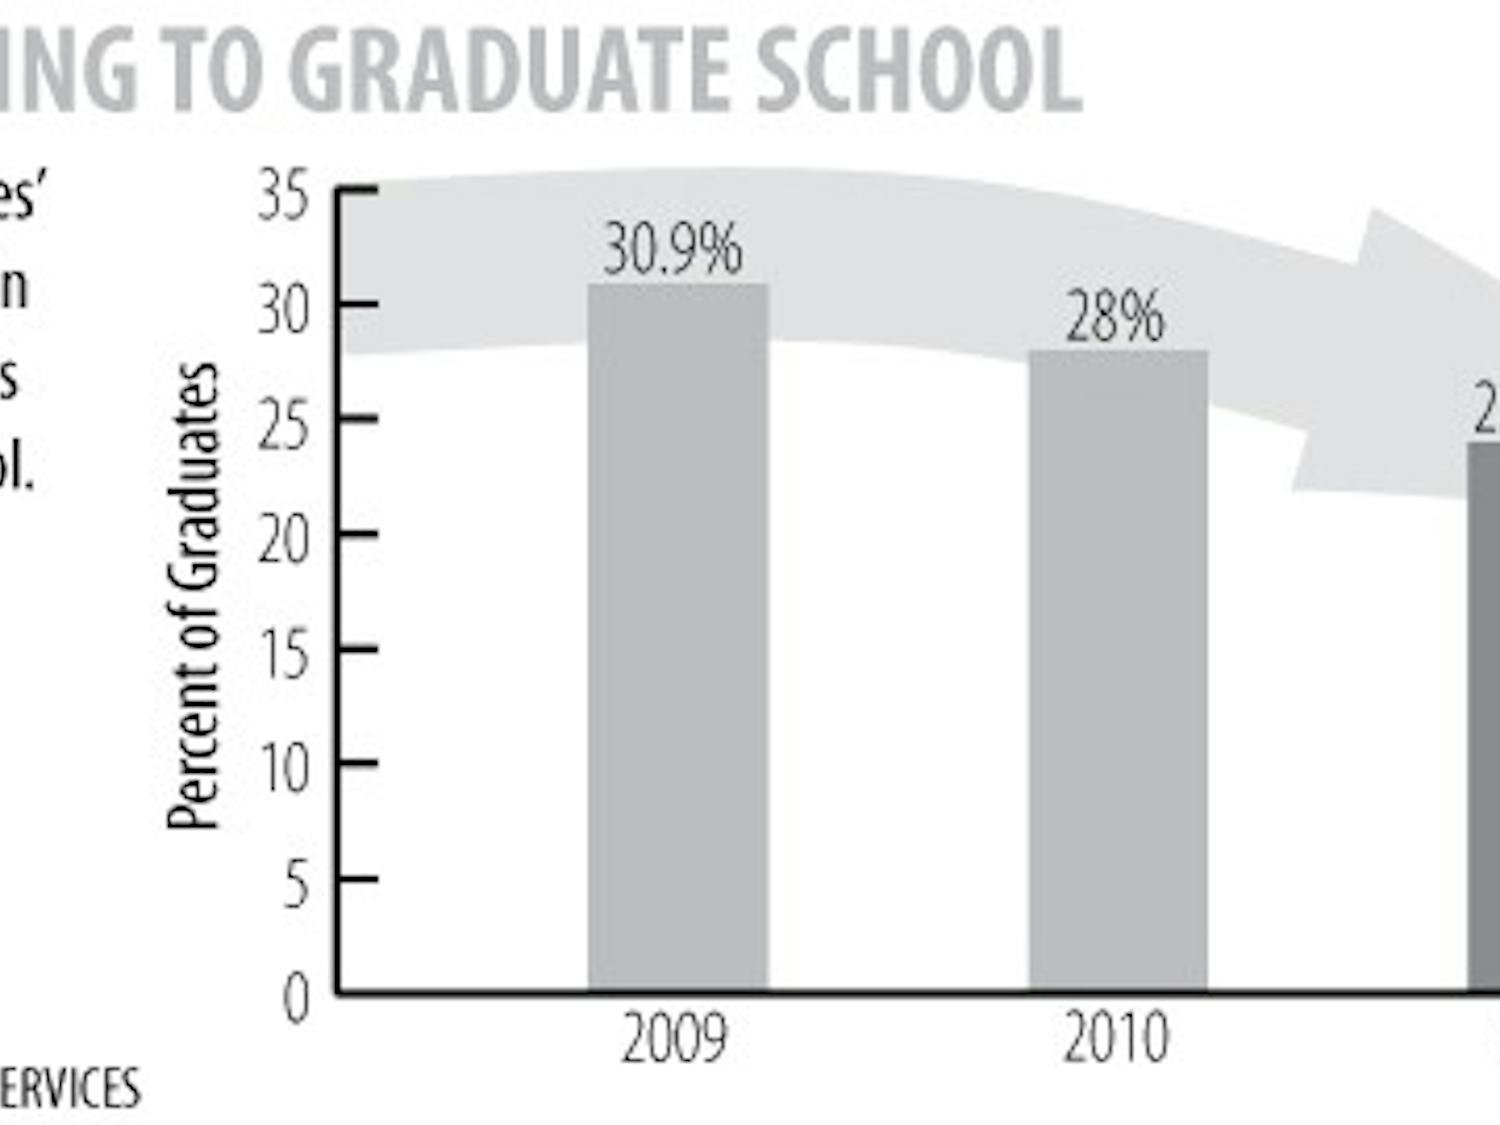 Graphic: More UNC graduates forego graduate school to enter job market (Anna Thompson)